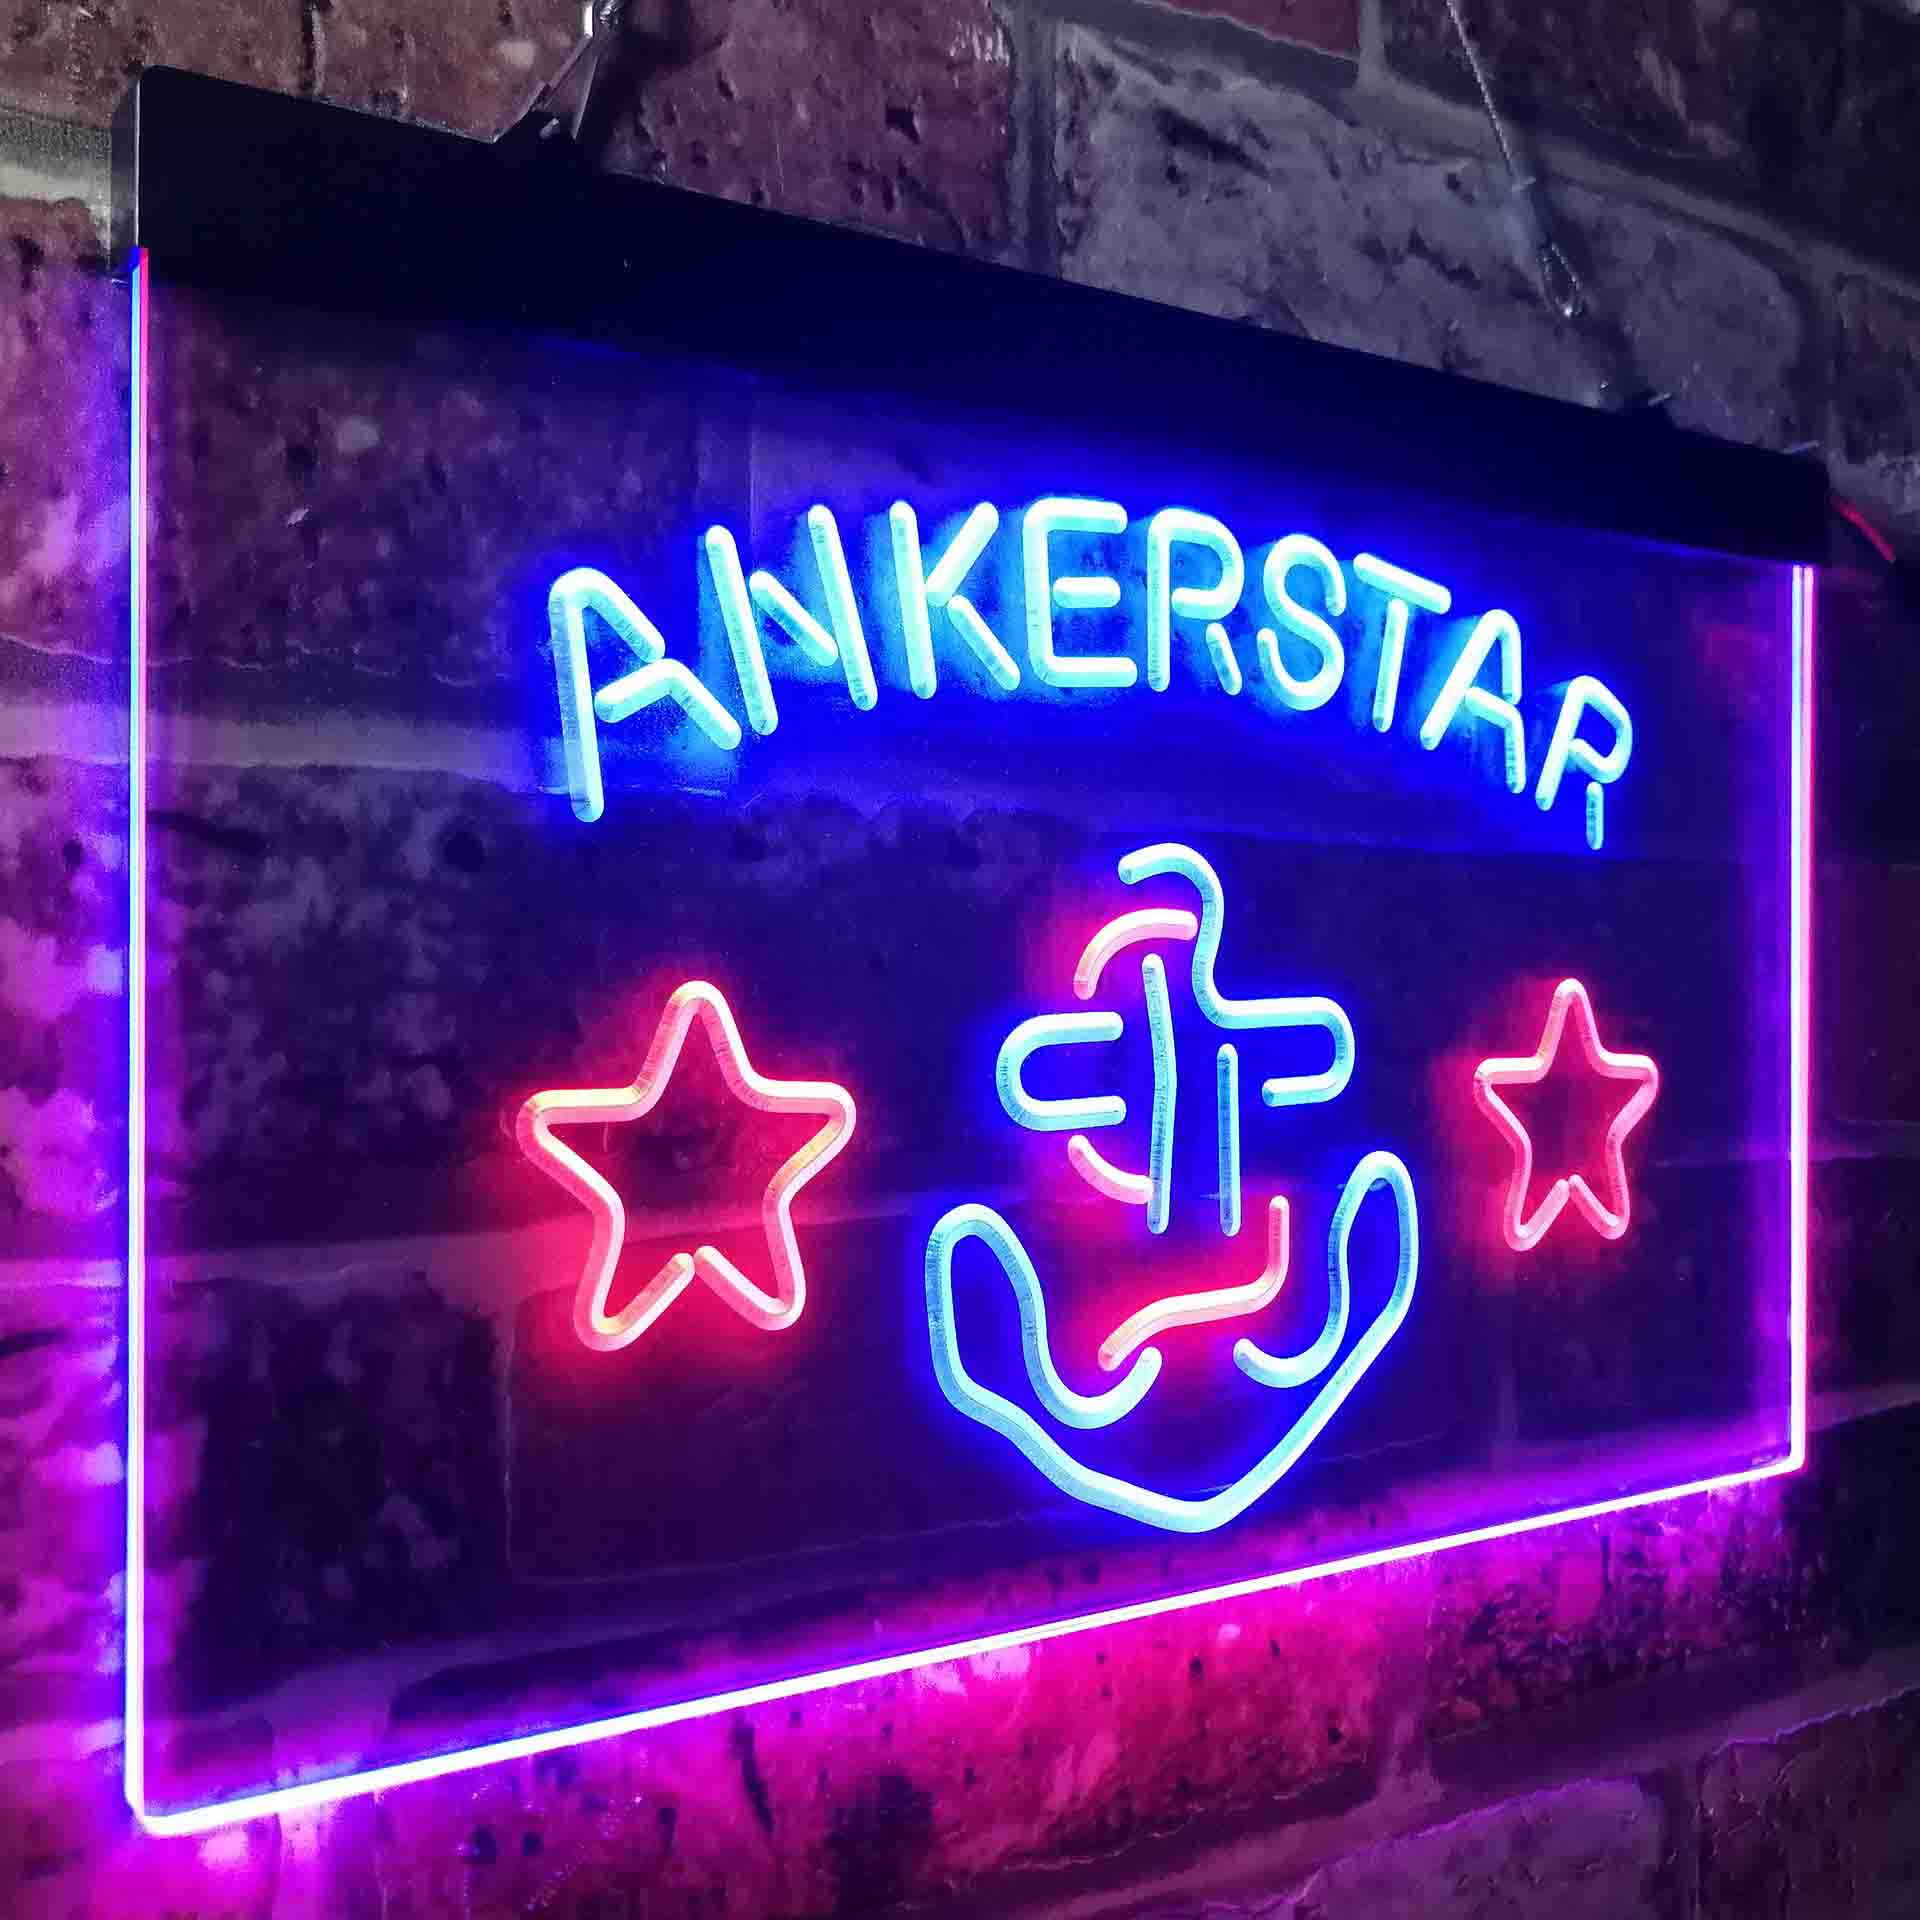 Ankerstar Anchor Cowboys Stars Beer Neon-Like LED Sign - ProLedSign